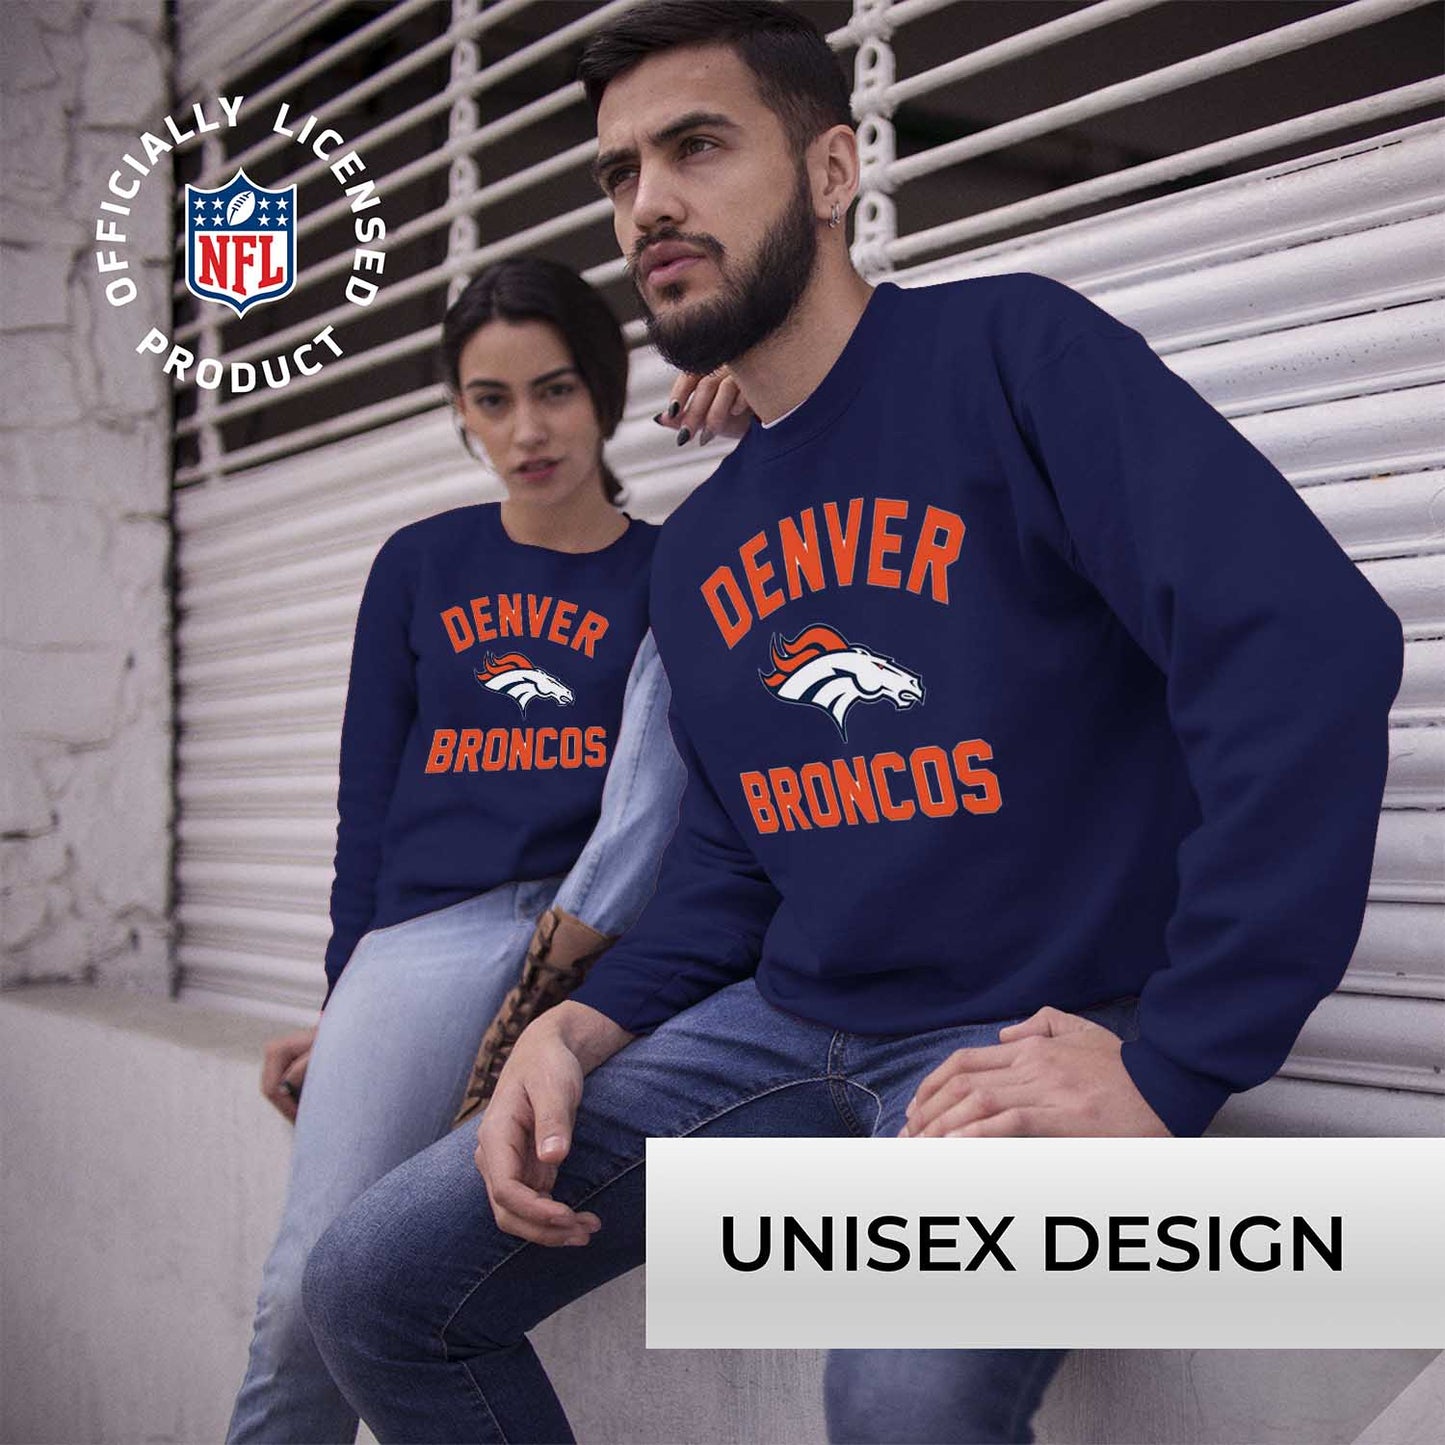 Denver Broncos NFL Adult Gameday Football Crewneck Sweatshirt - Navy